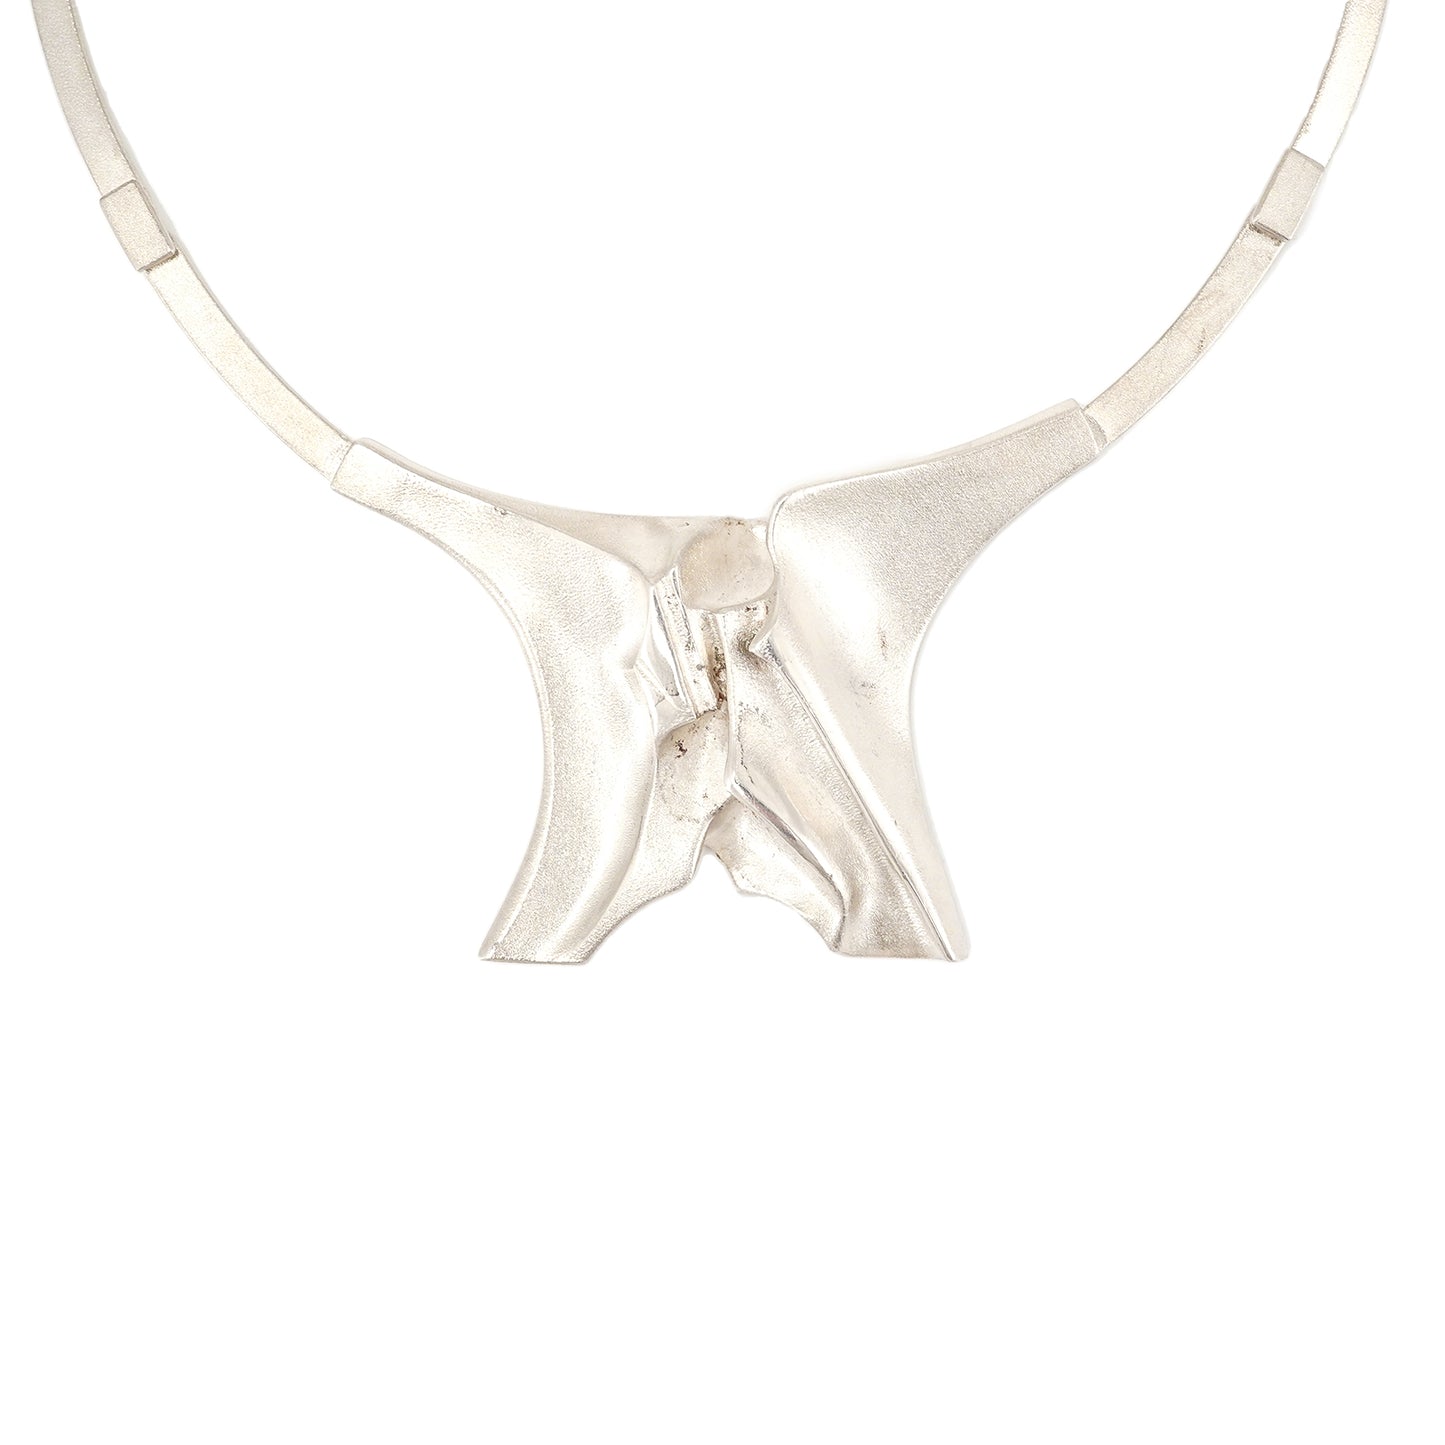 LAPPONIA necklace chain vintage 1989 silver 925 41cm women's jewelry designer necklace